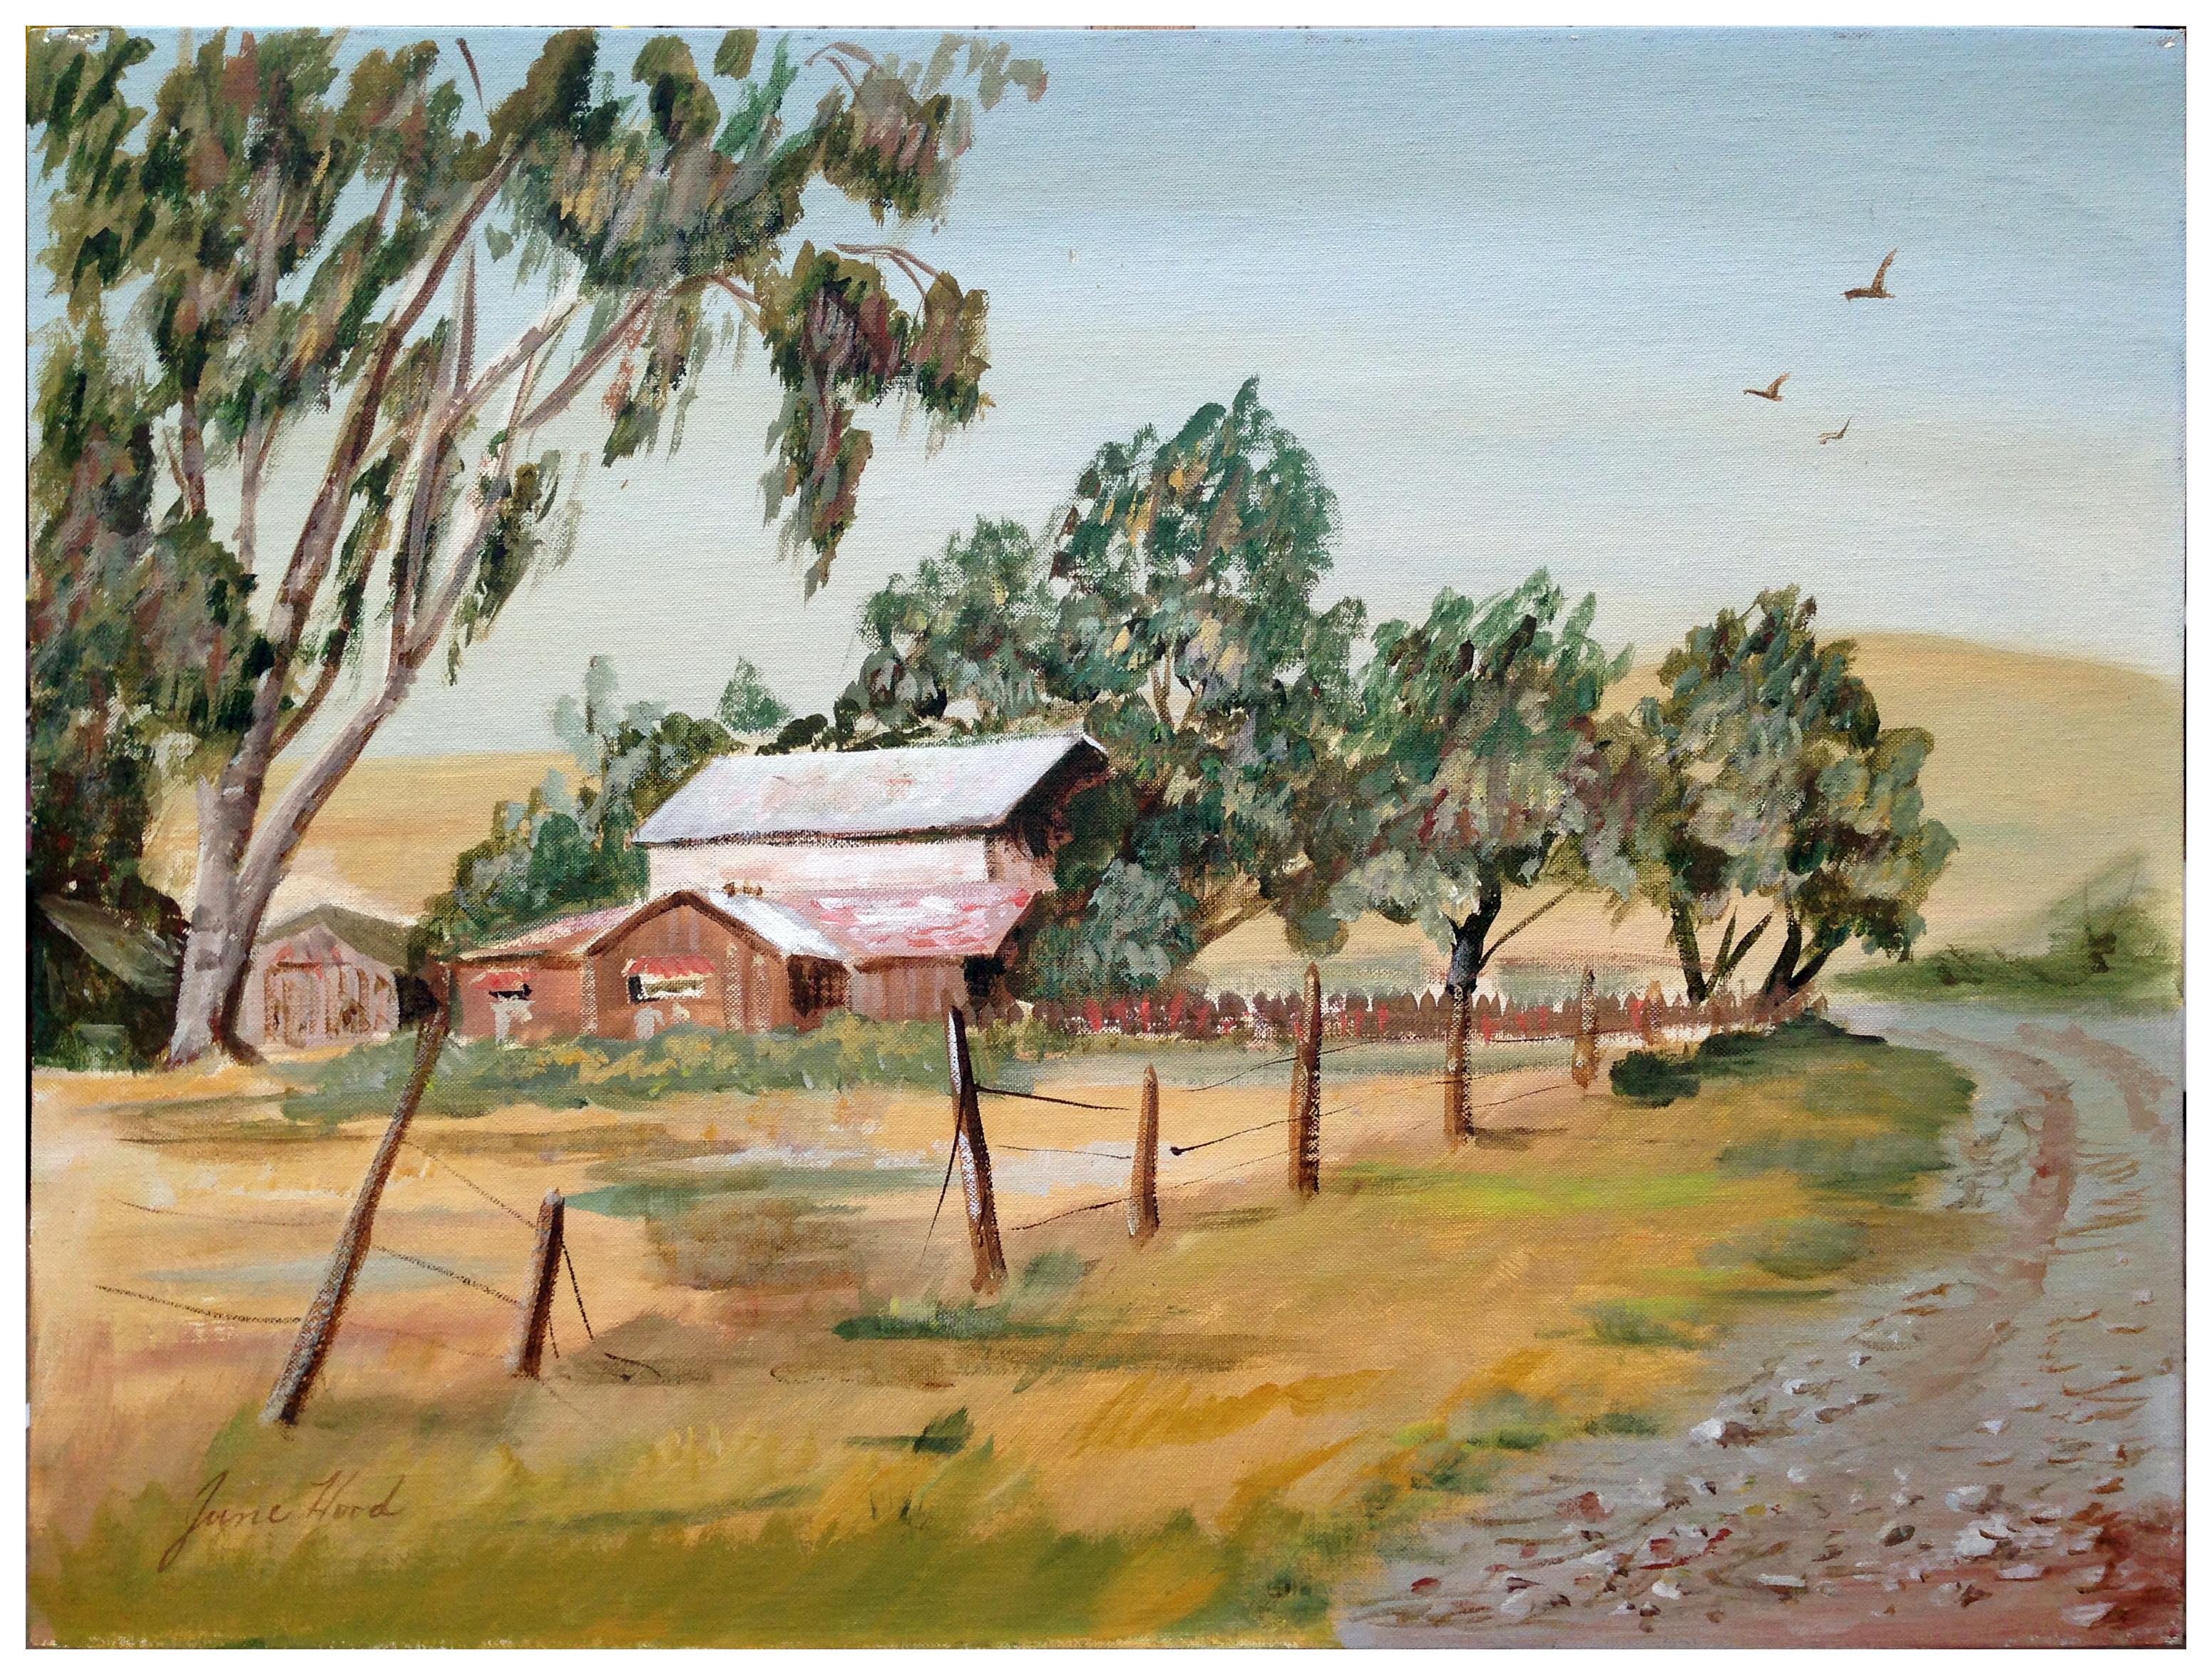 June Hood  Landscape Painting - Vintage Bay Area Farm Landscape, "Livermore Ranch" by June Hood